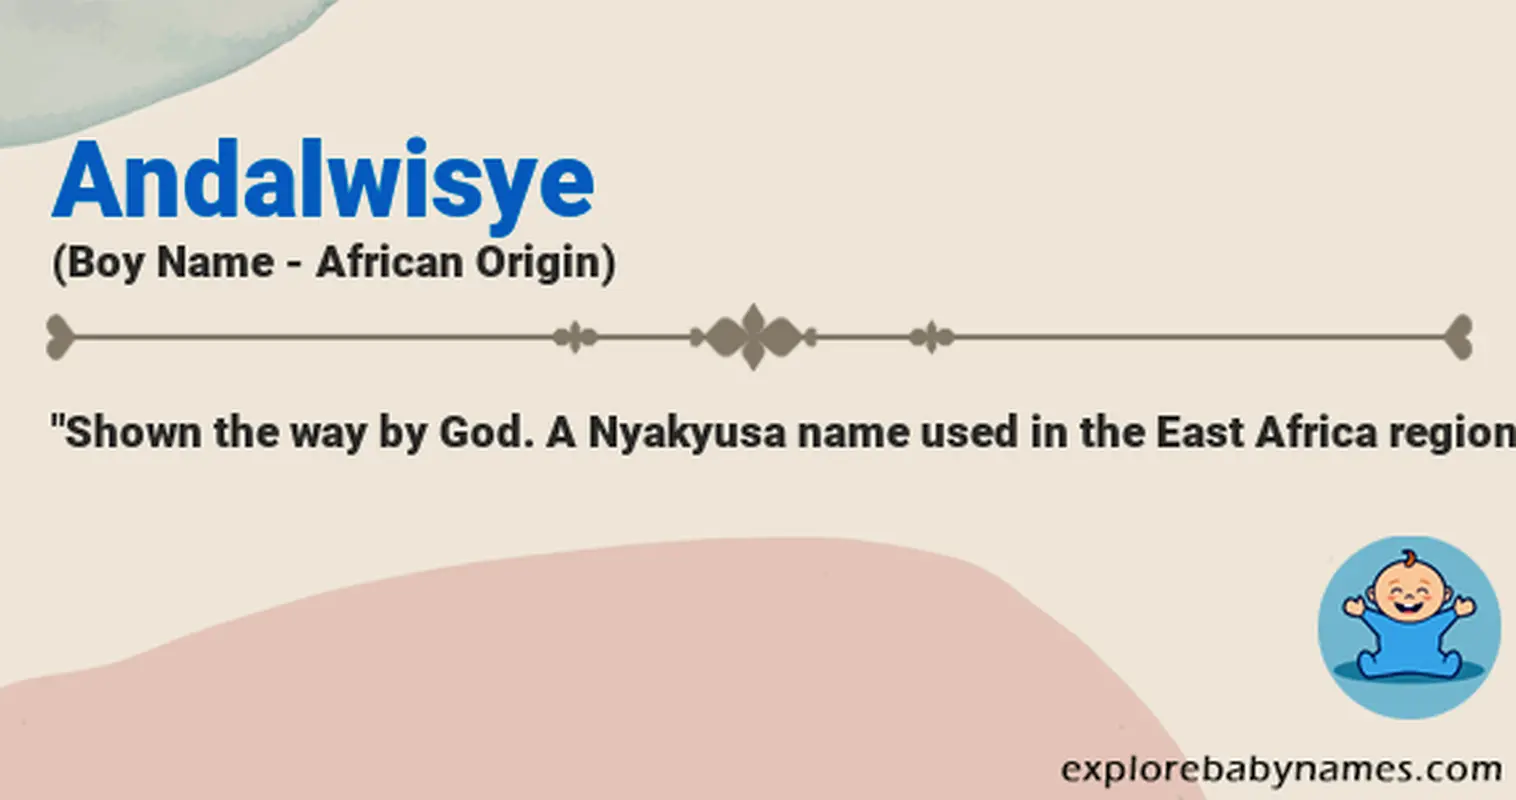 Meaning of Andalwisye